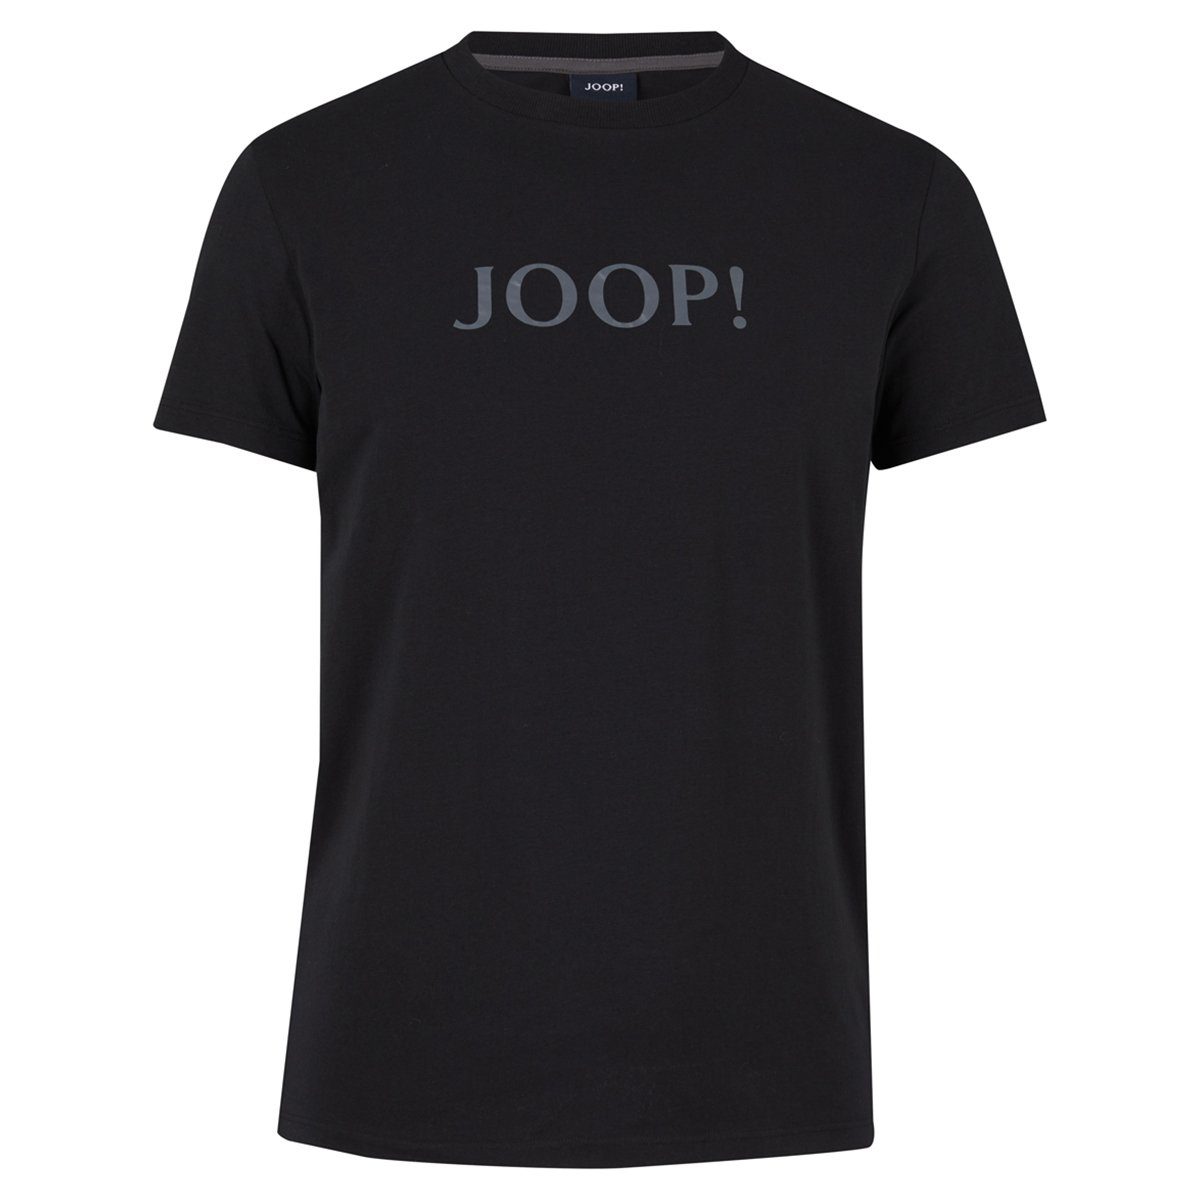 Joop! T-Shirt Herren T-Shirt - Loungewear, Rundhals, Halbarm Schwarz